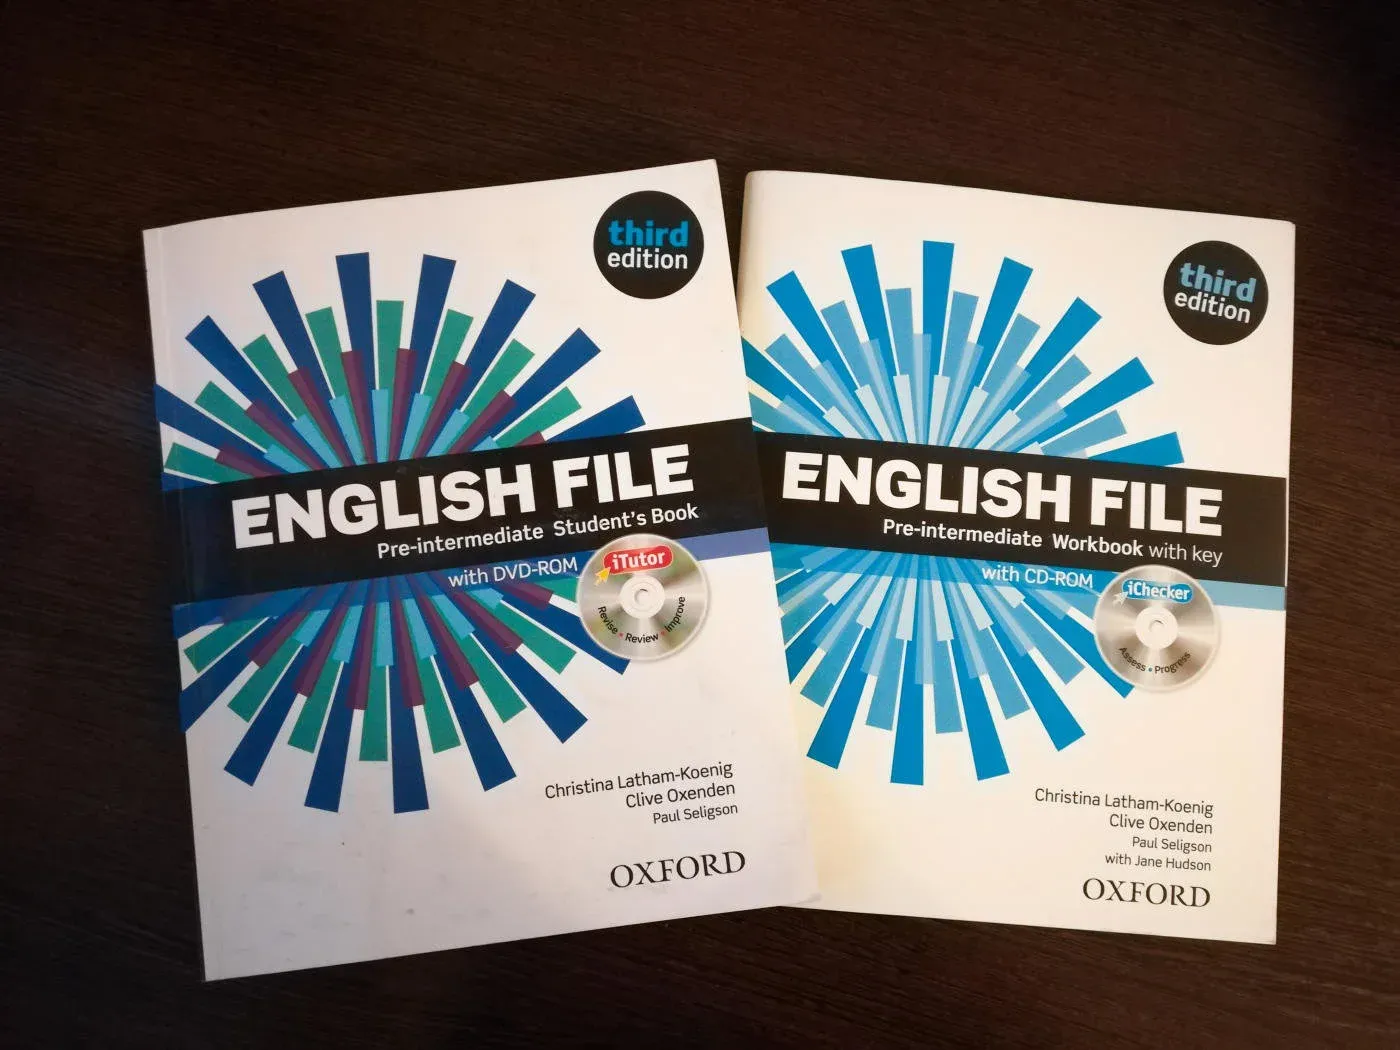 English first 3. English file 3 издание pre-Intermediate. Third Edition pre Intermediate. New English file Intermediate 3 издание. English pre Intermediate 3rd Edition.